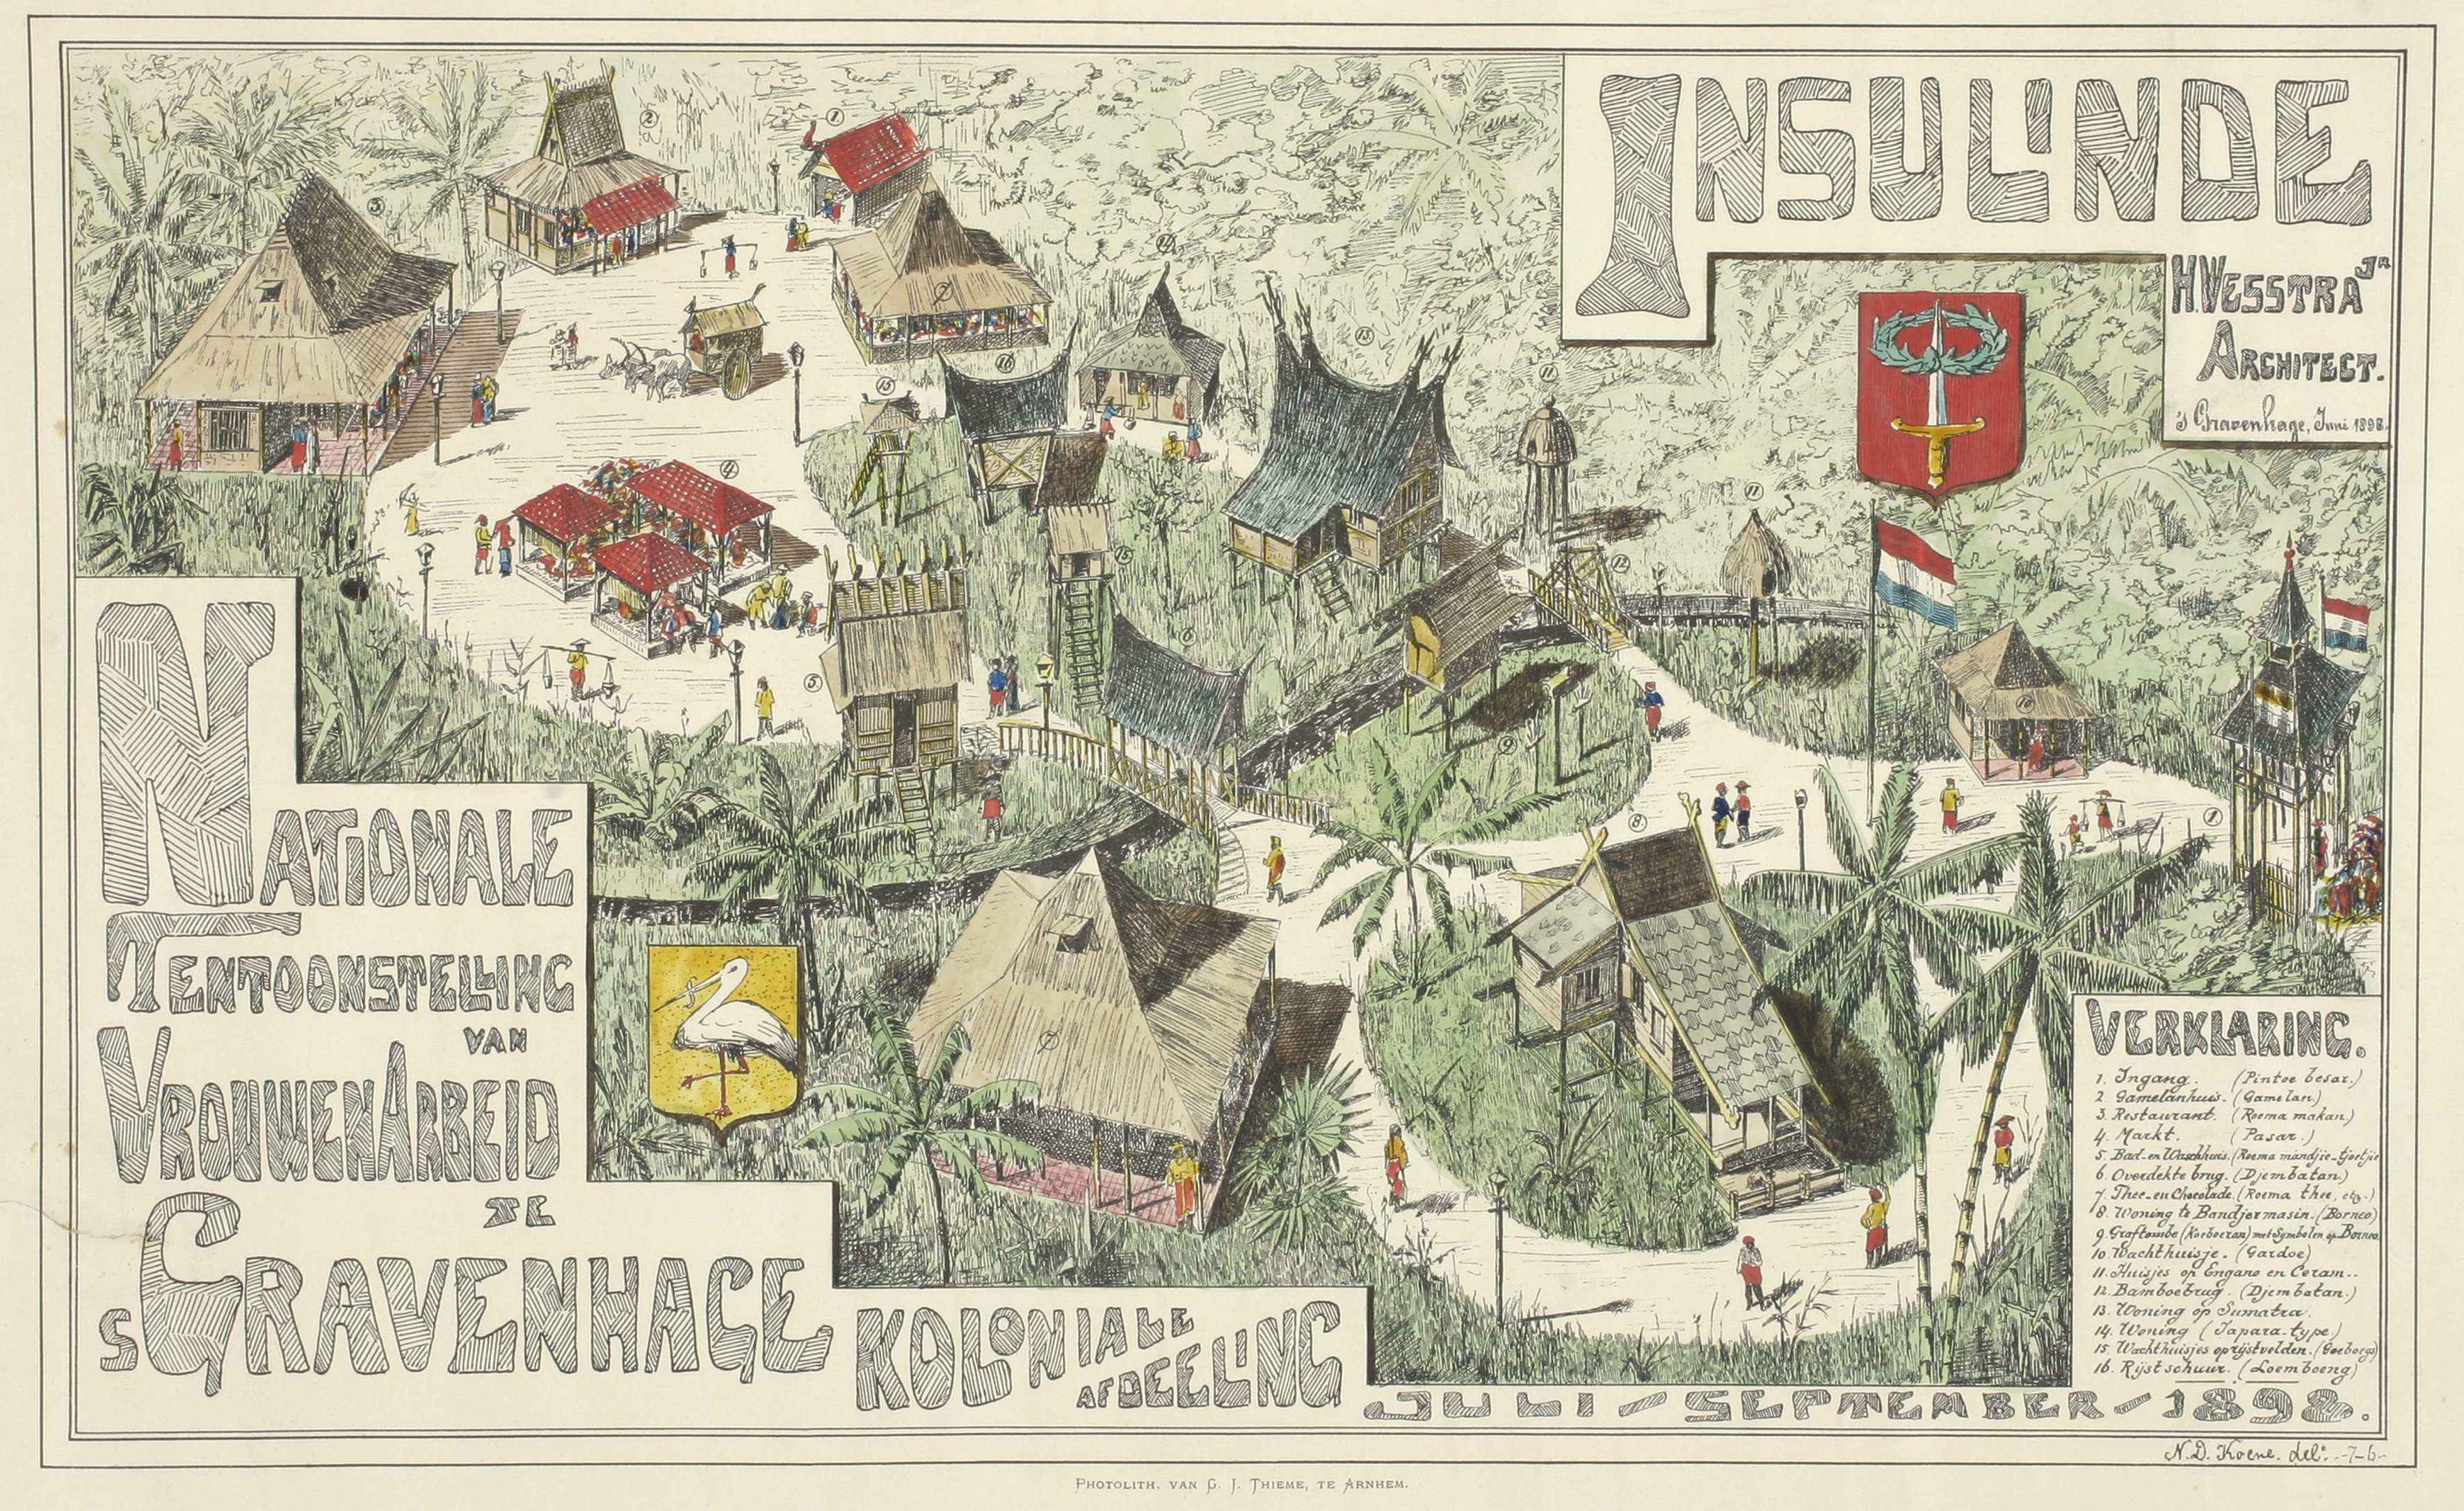 Plattegrond van de Nationale Tentoonstelling van Vrouwenarbeid te s Gravenhage Koloniale Afdeling juli september 1898 klein